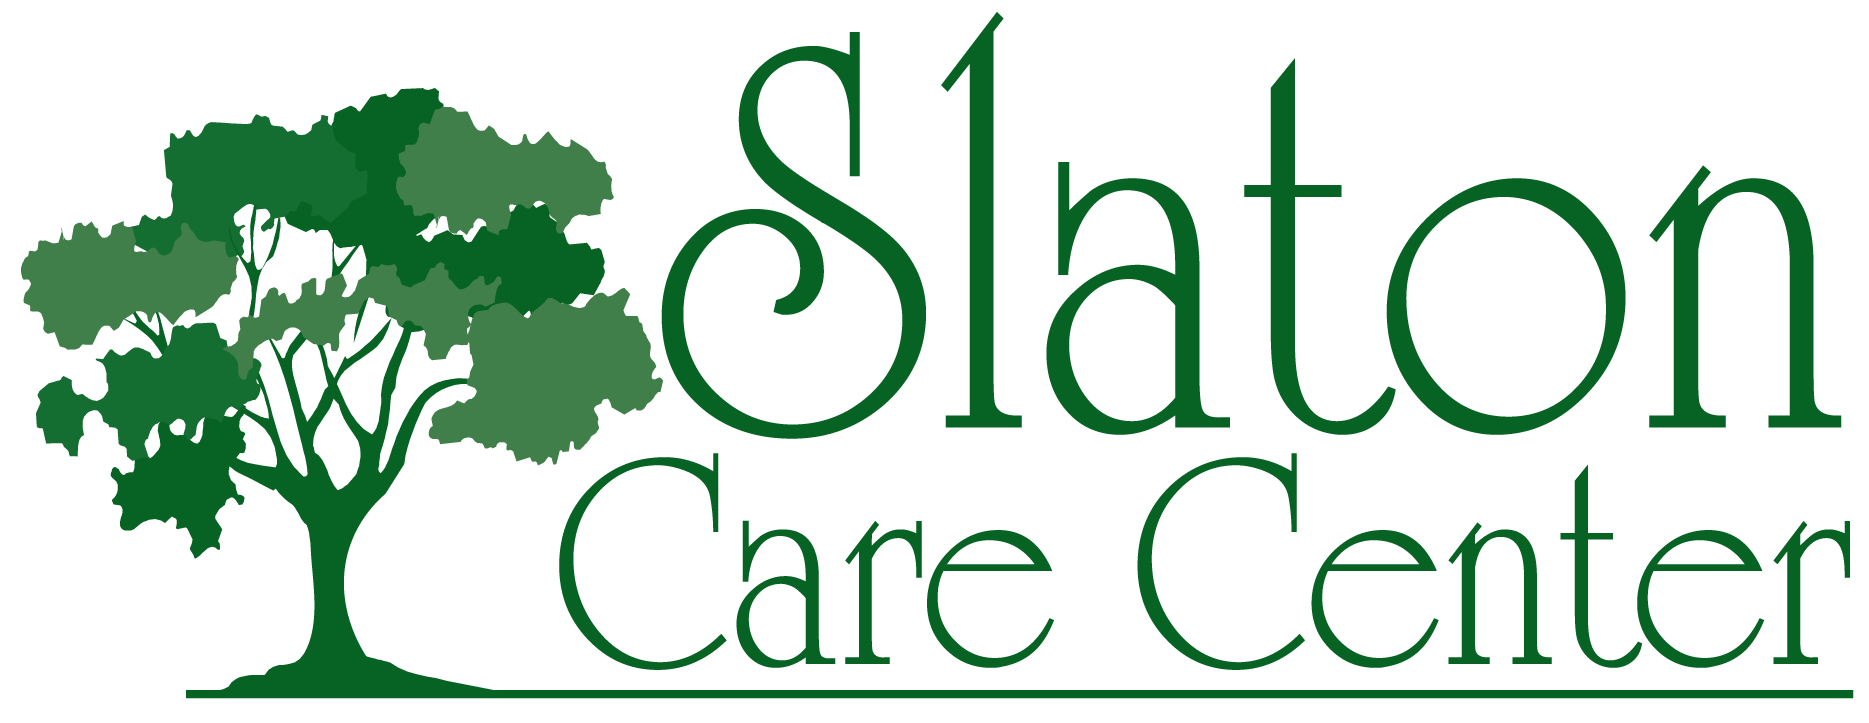 Slaton Care Center